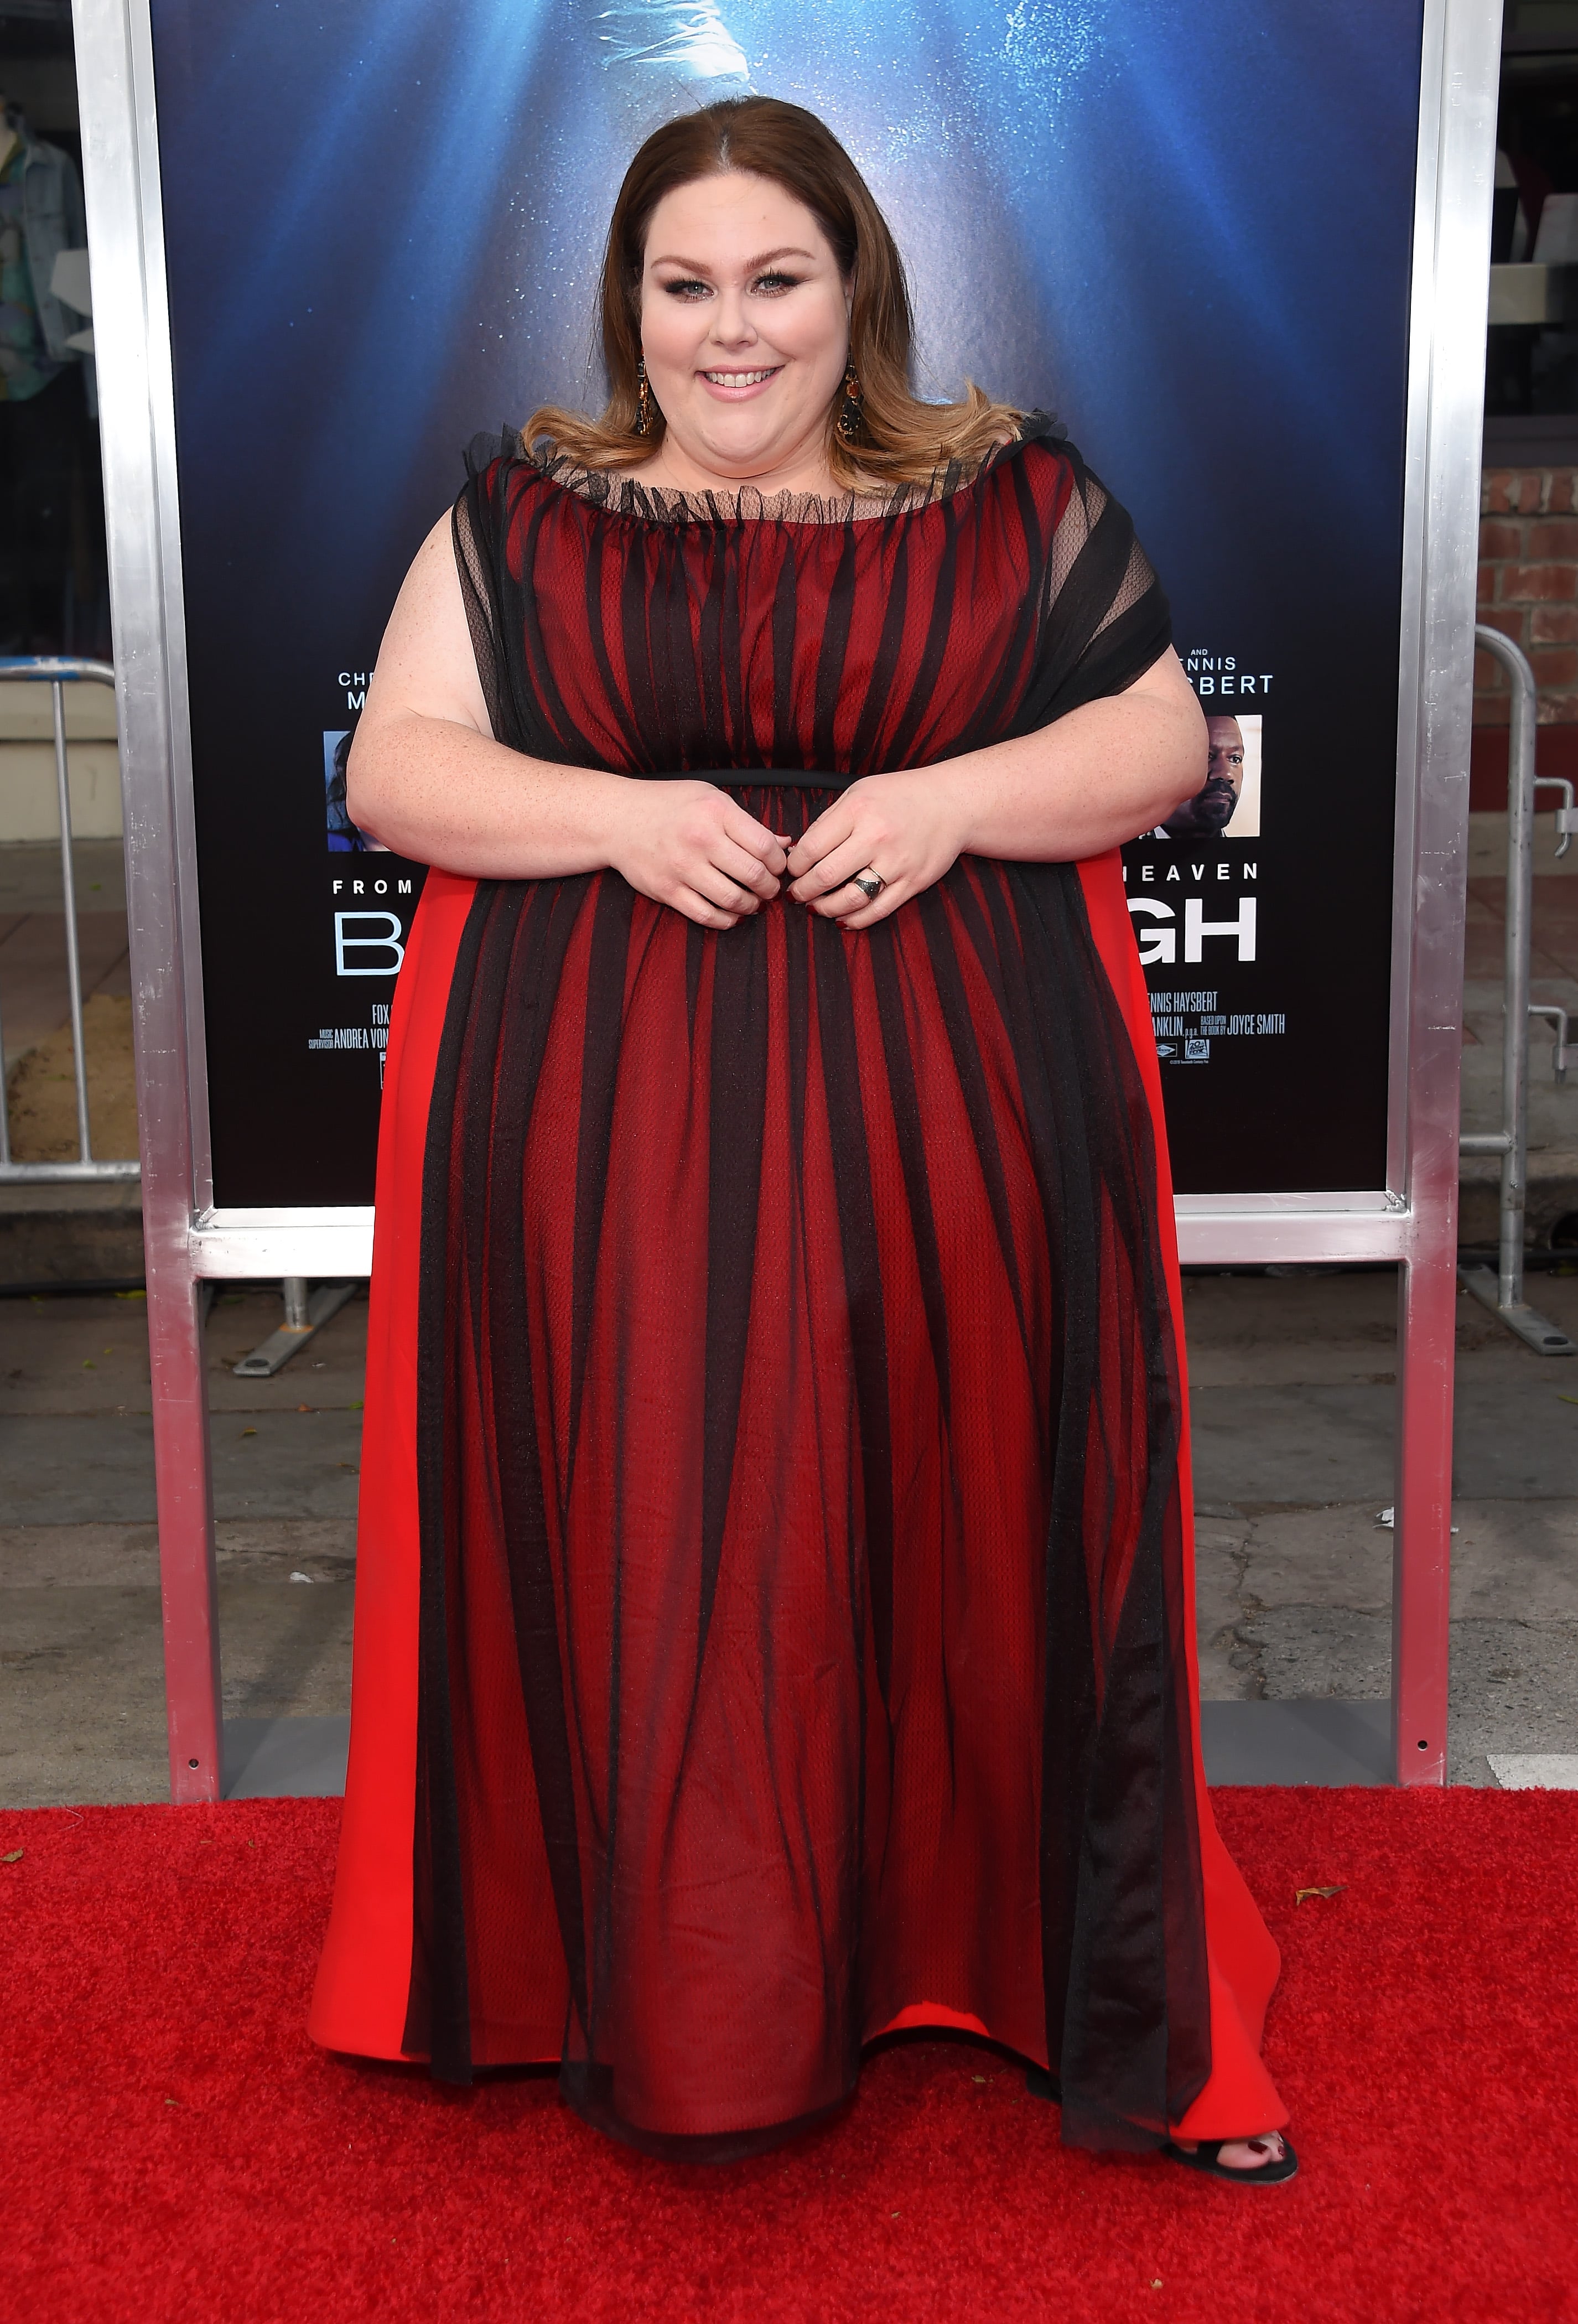 Chrissy Metz Red Dress Black Heels at Breakthrough Premiere